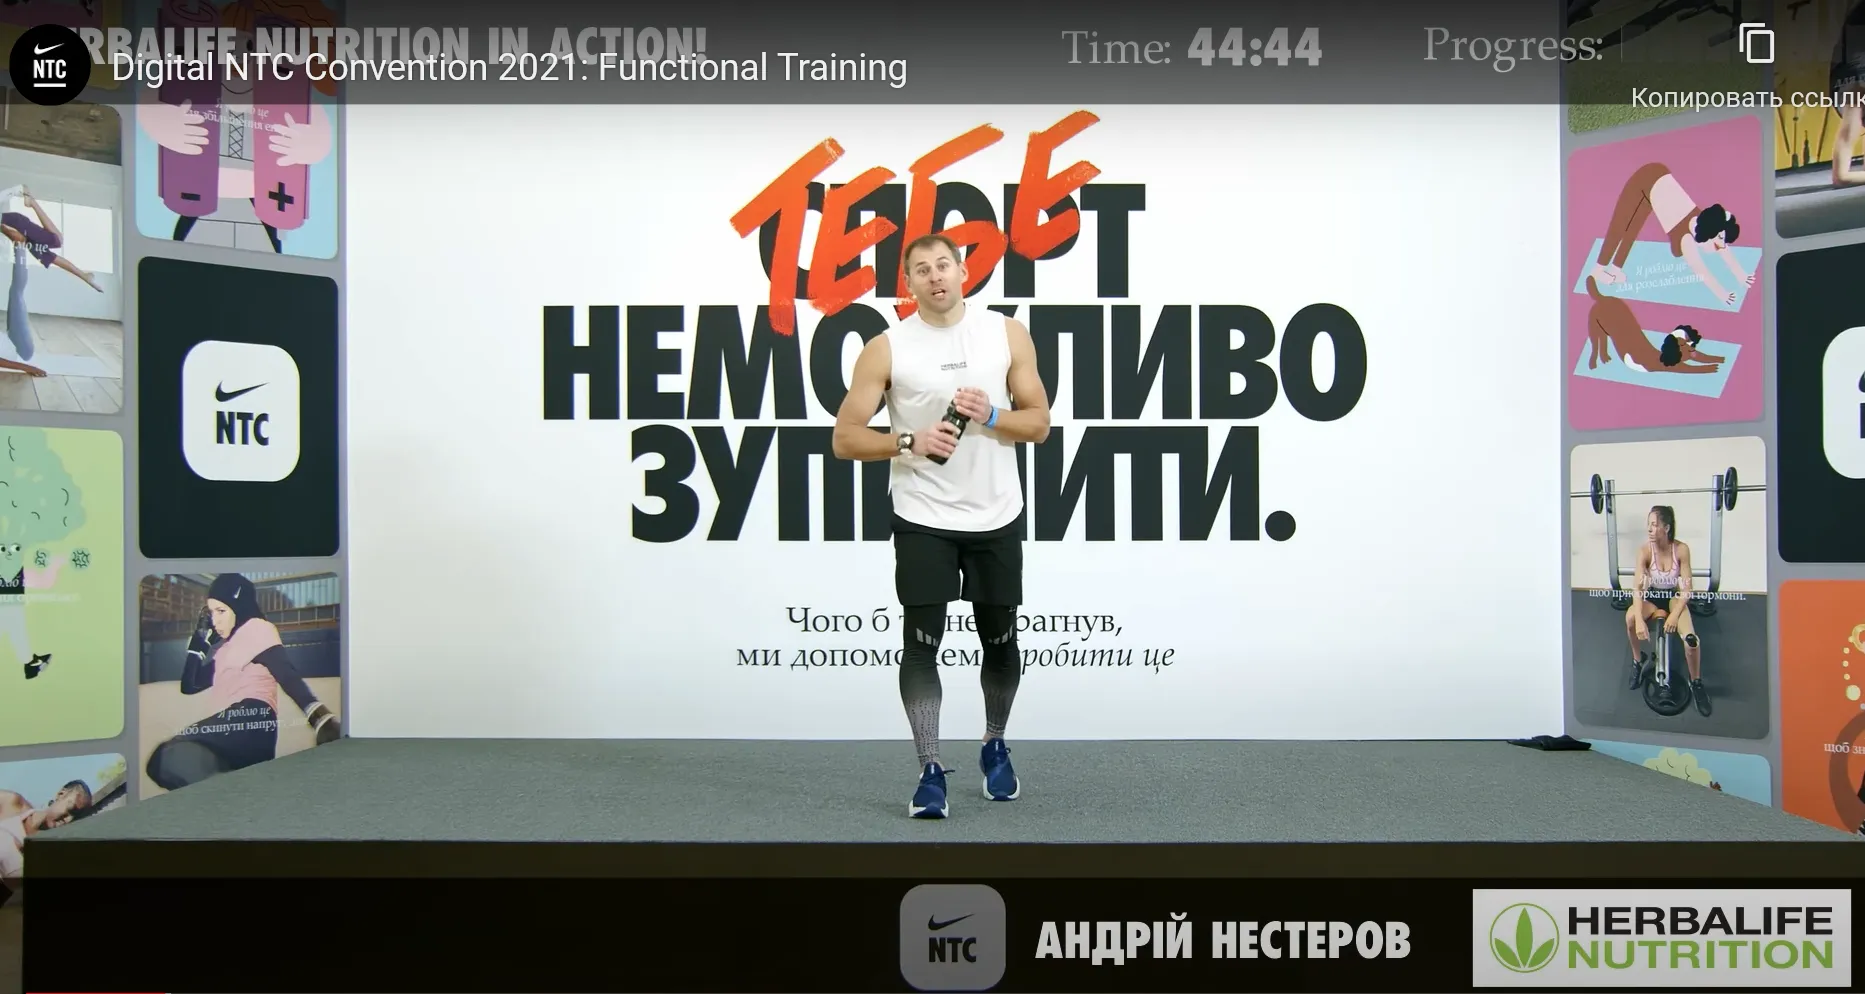 Професійний фітнес-тренер, експерт Herbalife Nutrition Андрій Нестеров